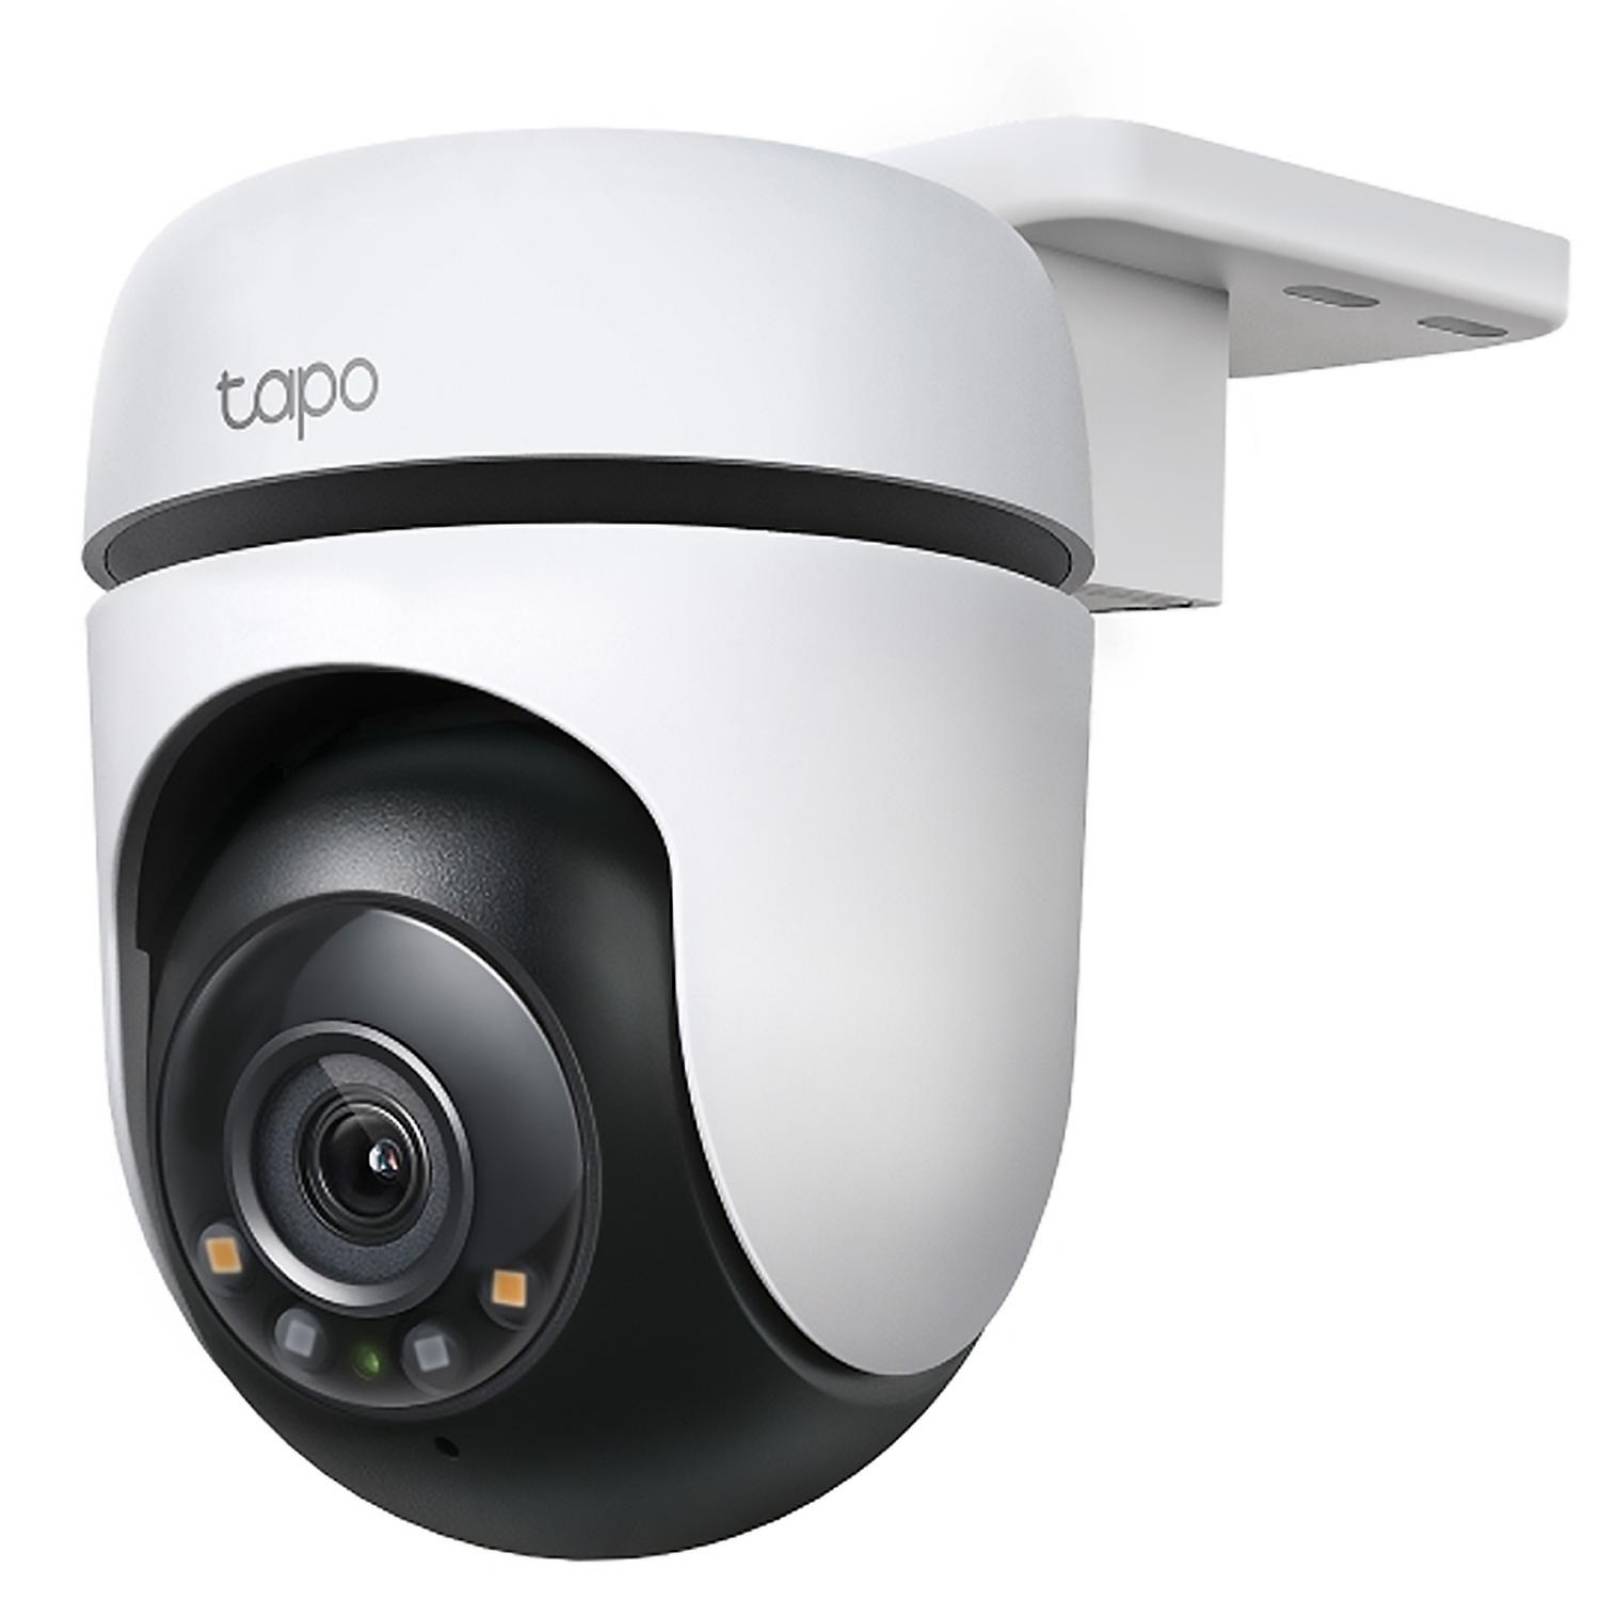 Cámara de vigilancia IP   Blink Mini Pan-Tilt, Graba HD, Función de  visión nocturna, 360º, Negro